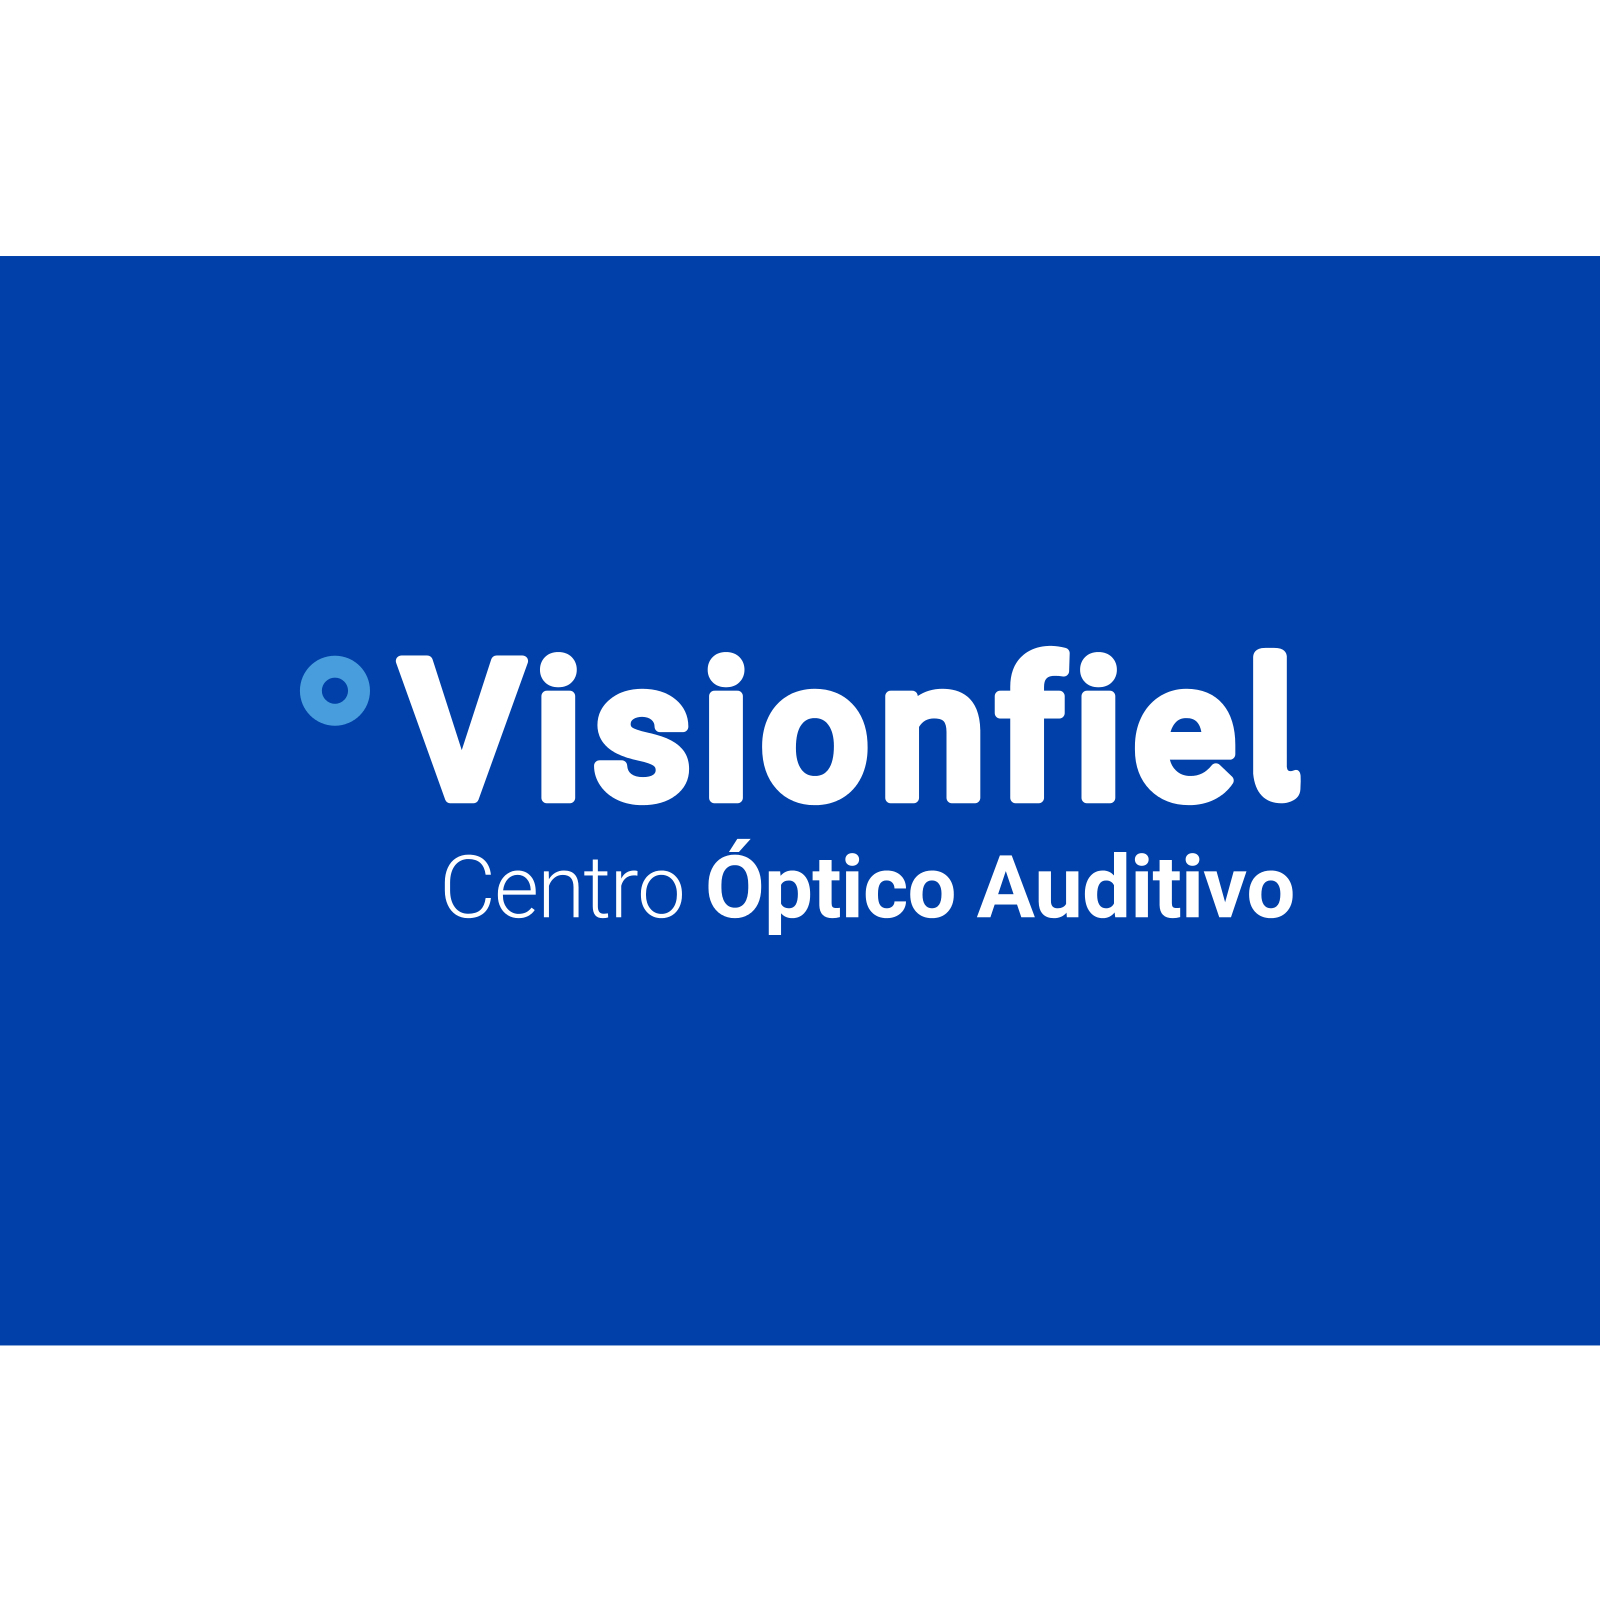 Visionfiel Centro Óptico Auditivo Logo